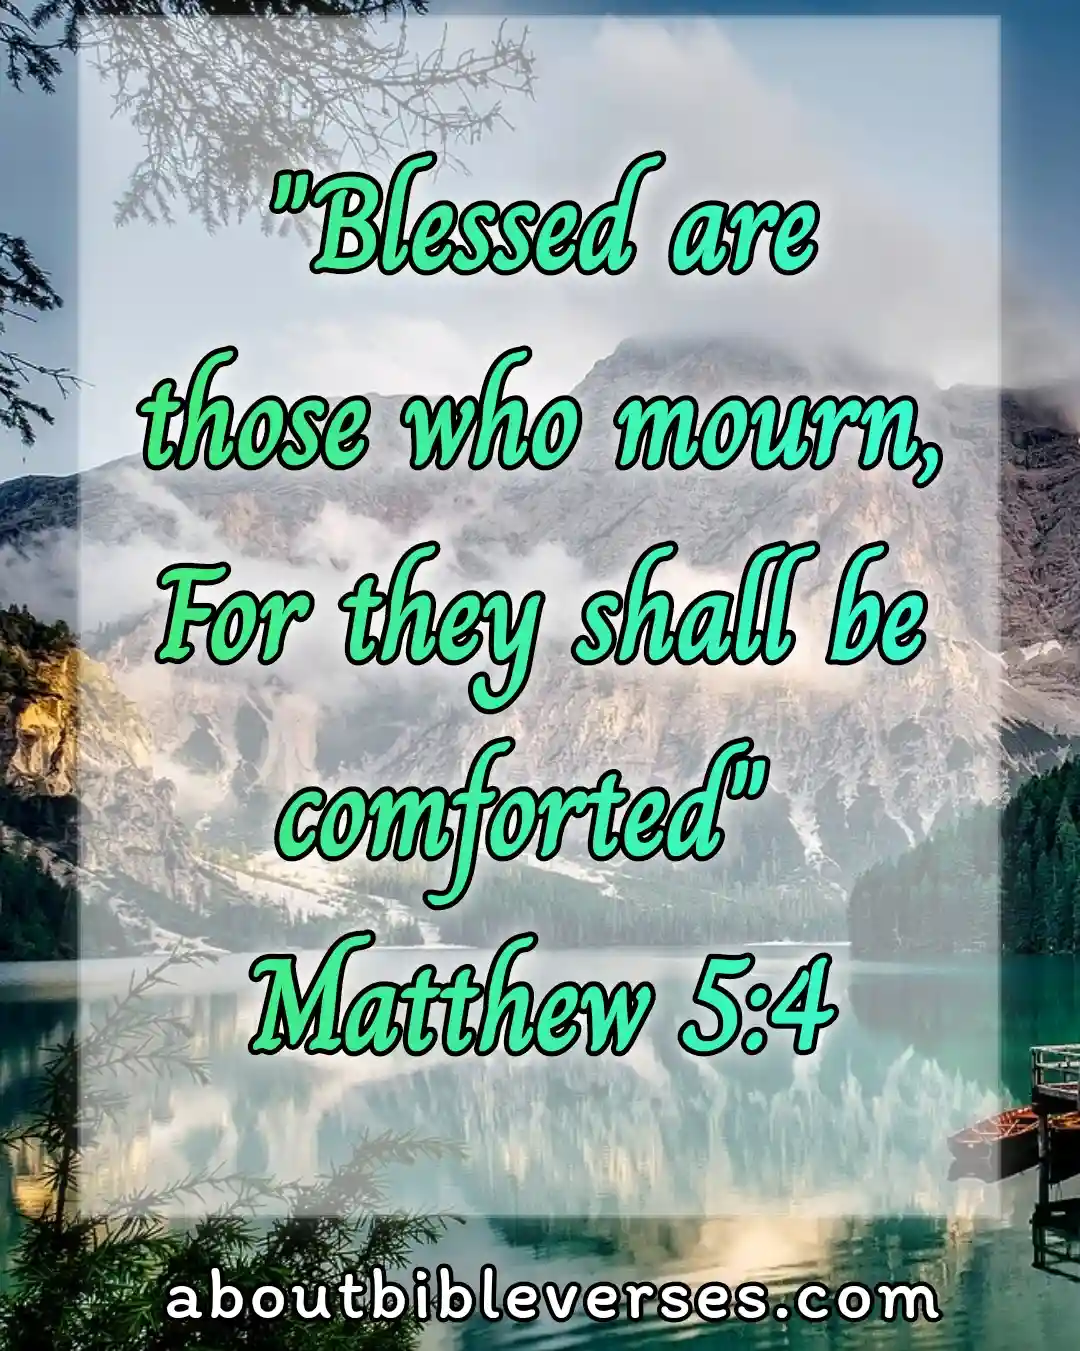 Holy Saturday Morning Blessing Bible Verses (Matthew 5:4)